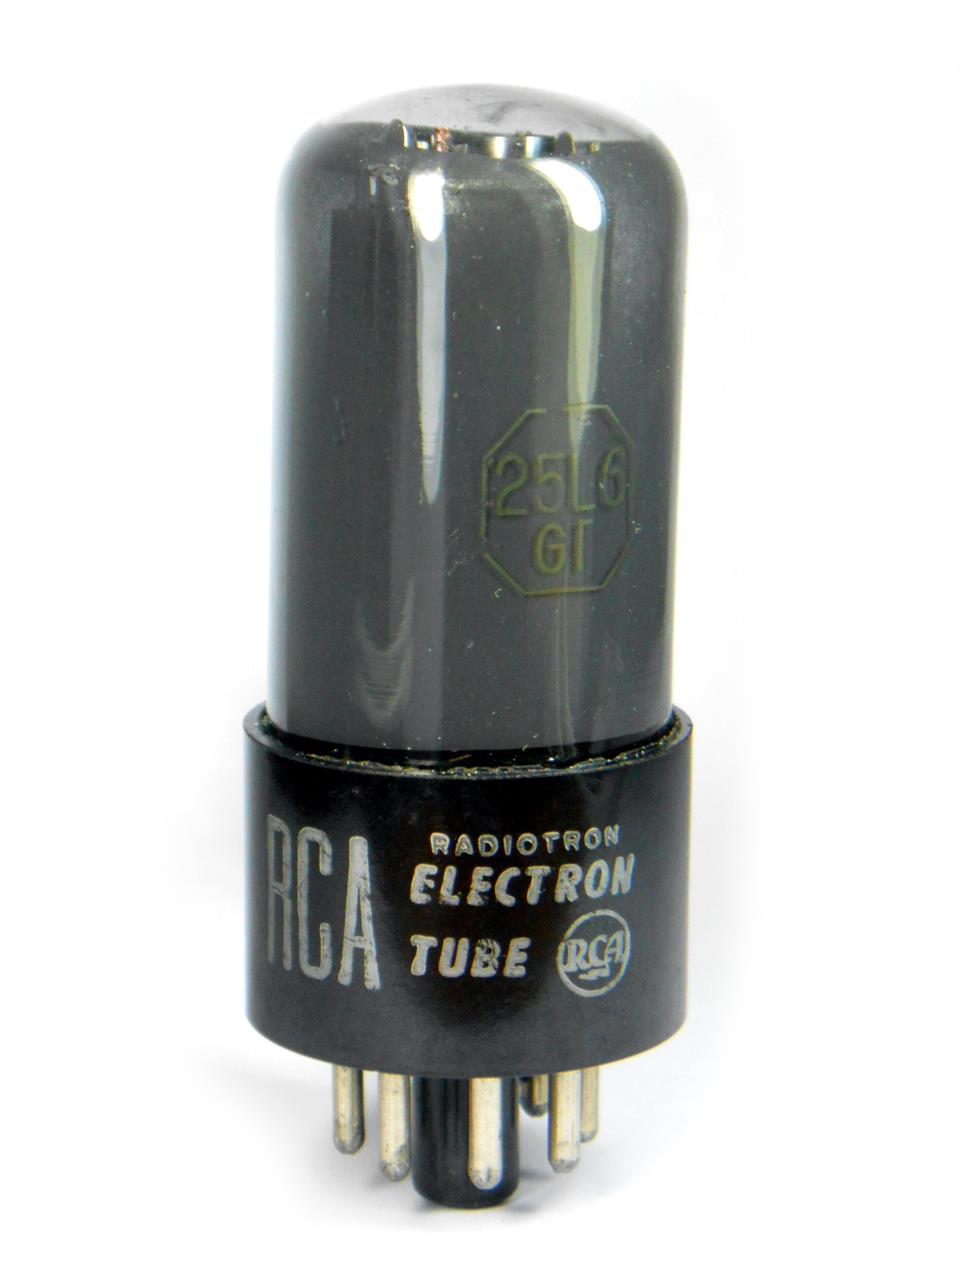 Válvulas eletrônicas pentodo de saída de som para rádios valvulados rabo quente - Válvula 25L6GT RCA